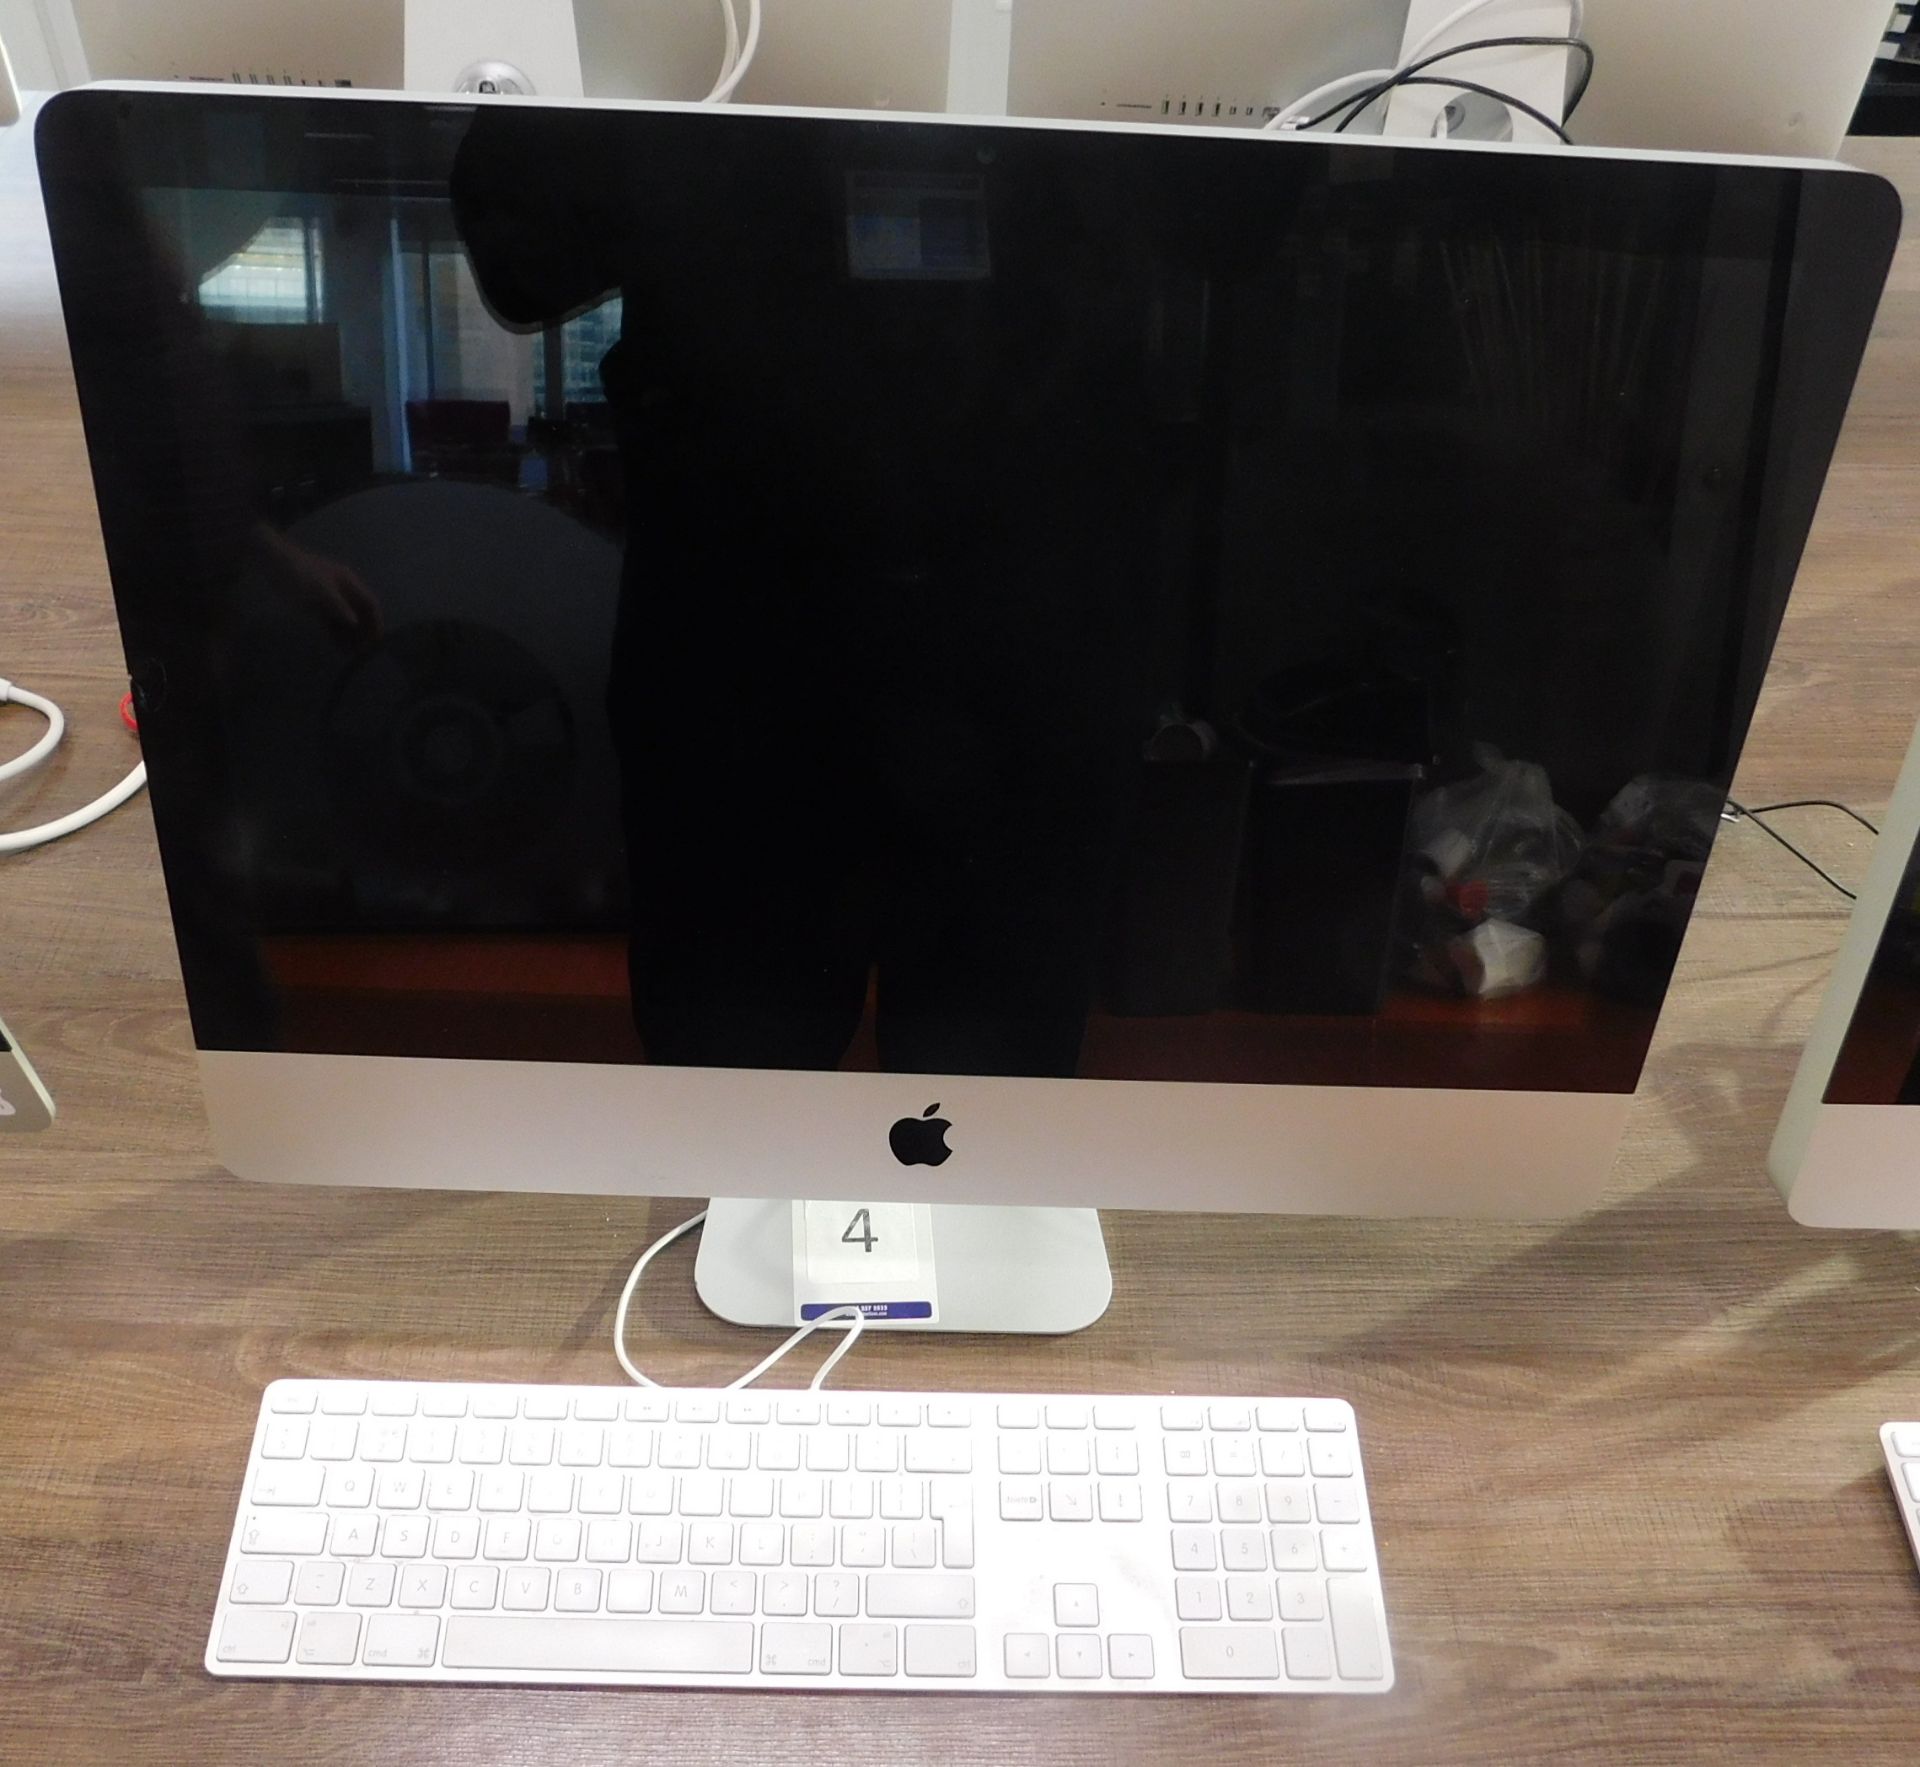 Apple 21.5in i5 iMac, 2.5ghz Processor, 4gb RAM, 500gb HDD, A1311, s/n CO2H73BKDHJF with Keyboard